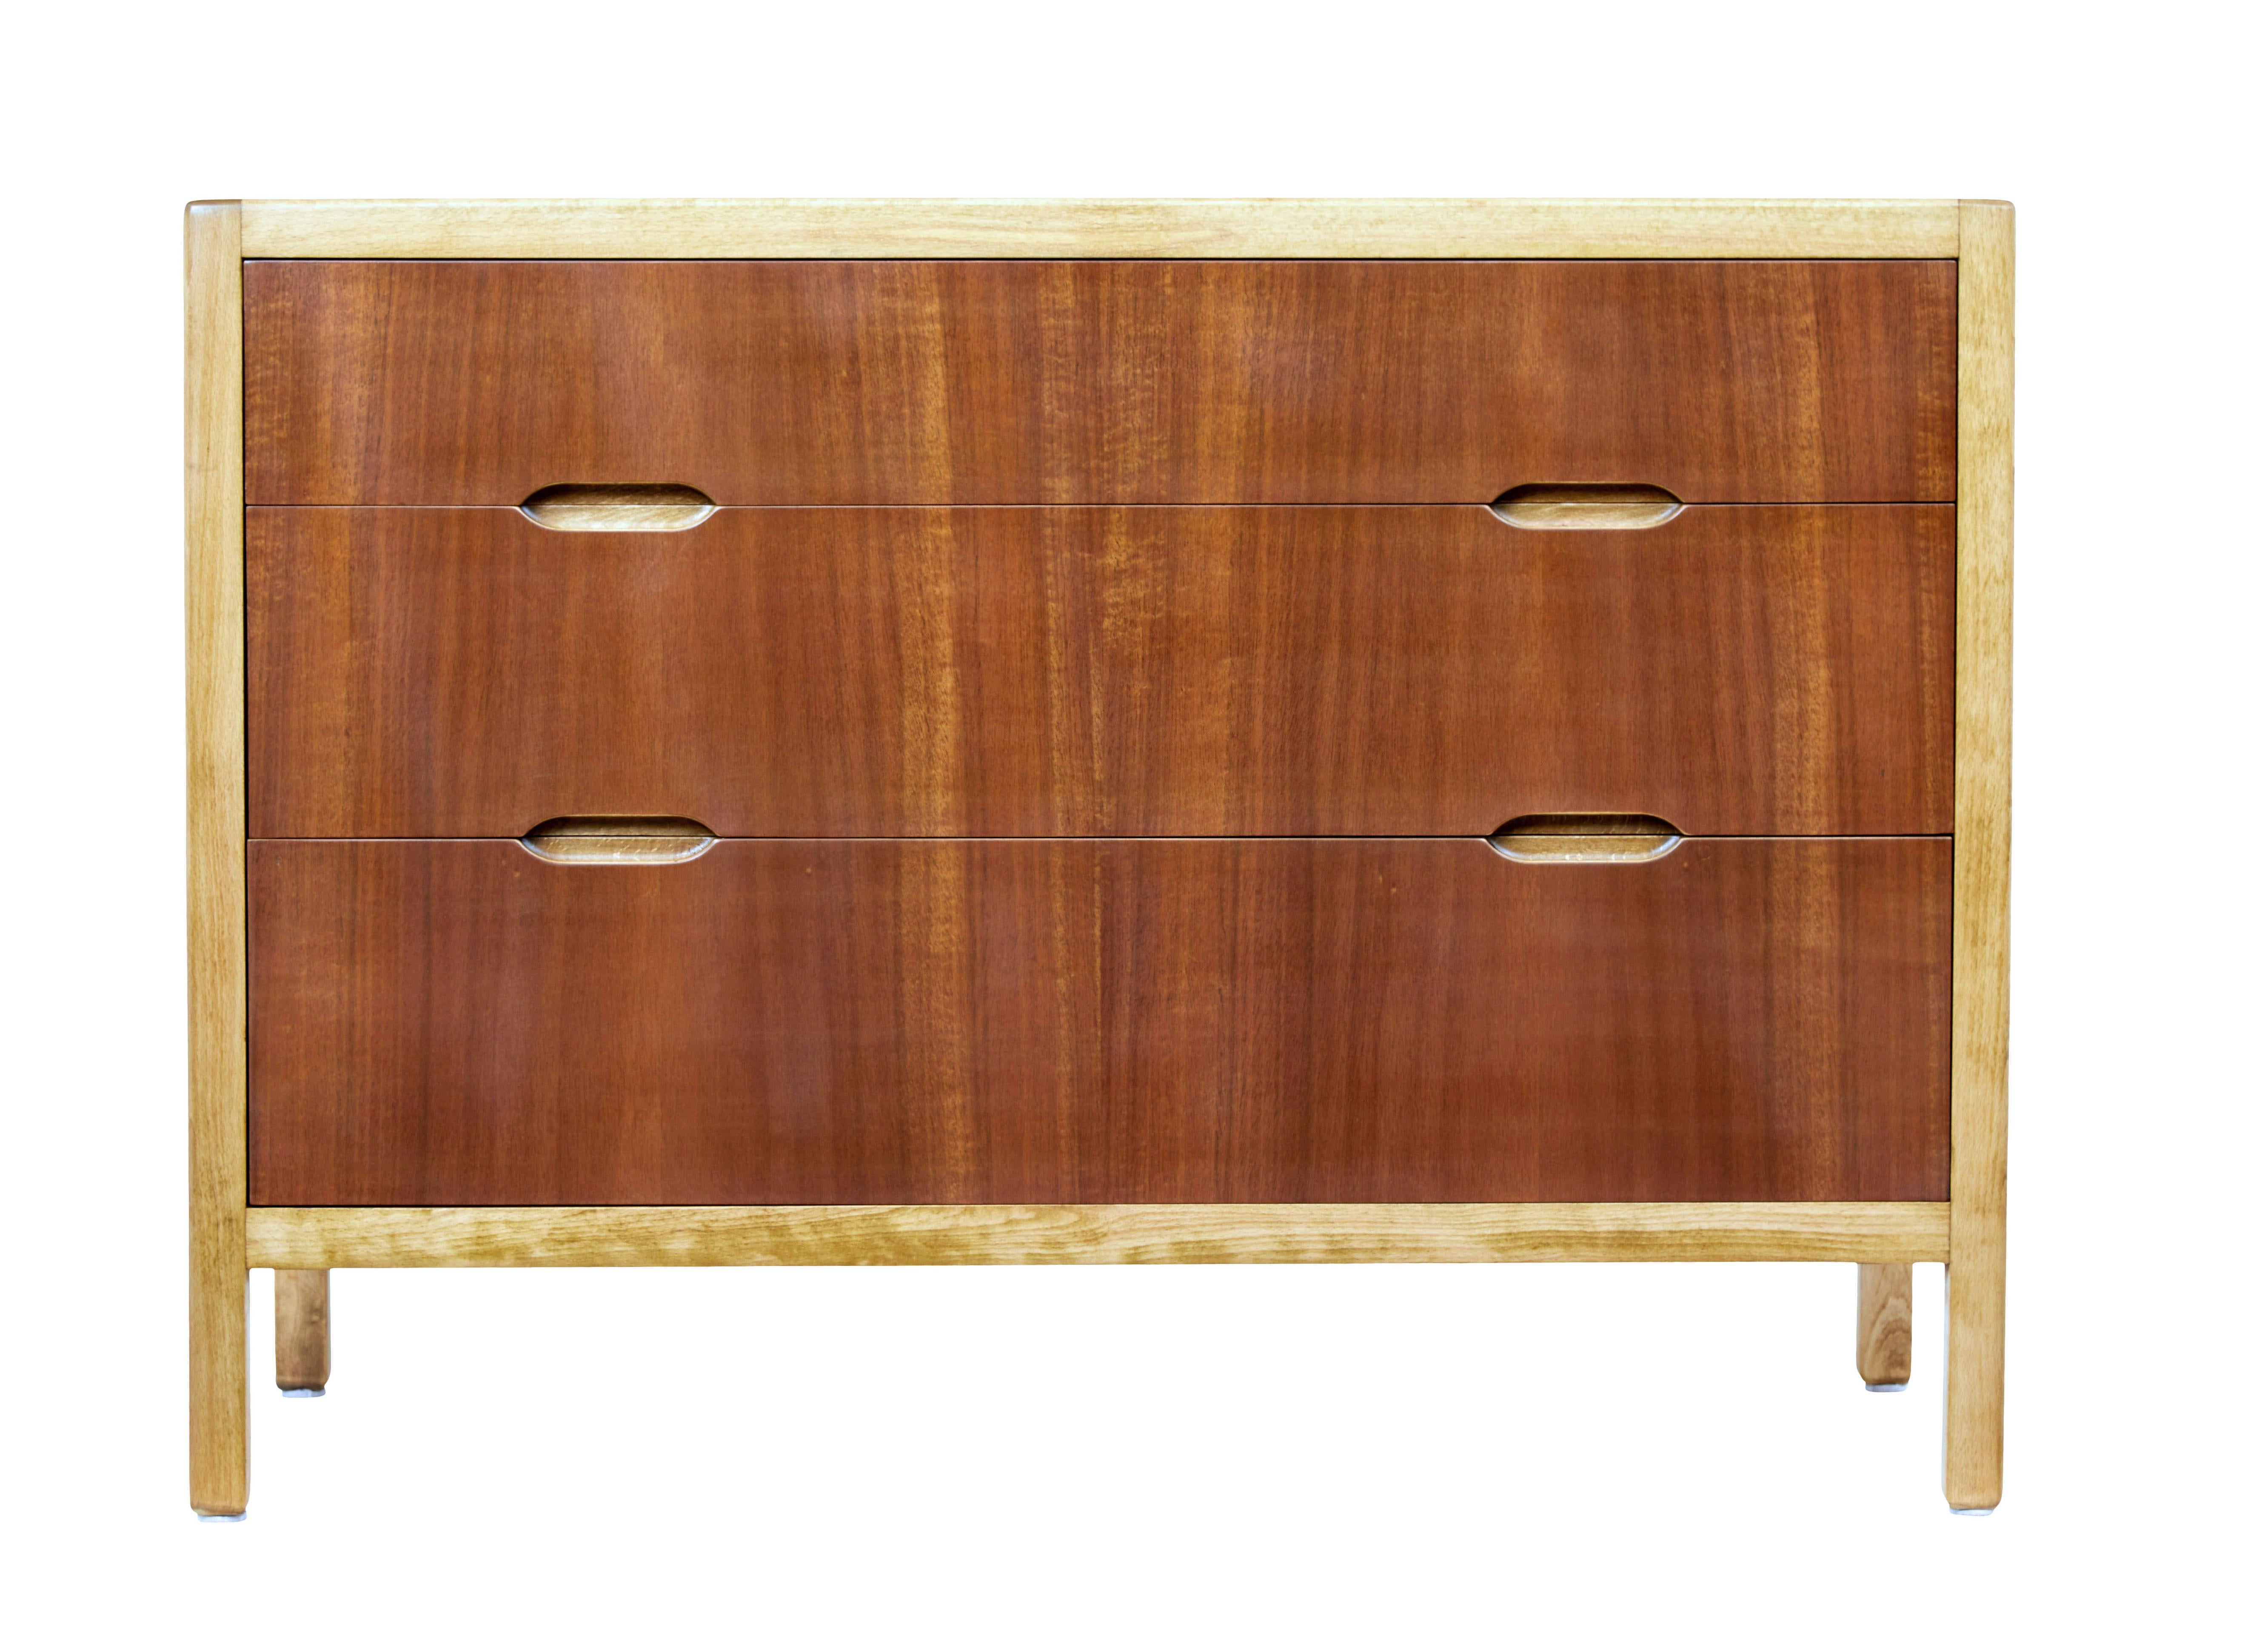 Mid-Century Modern Mid 20th century Swedish teak and birch chest of drawers